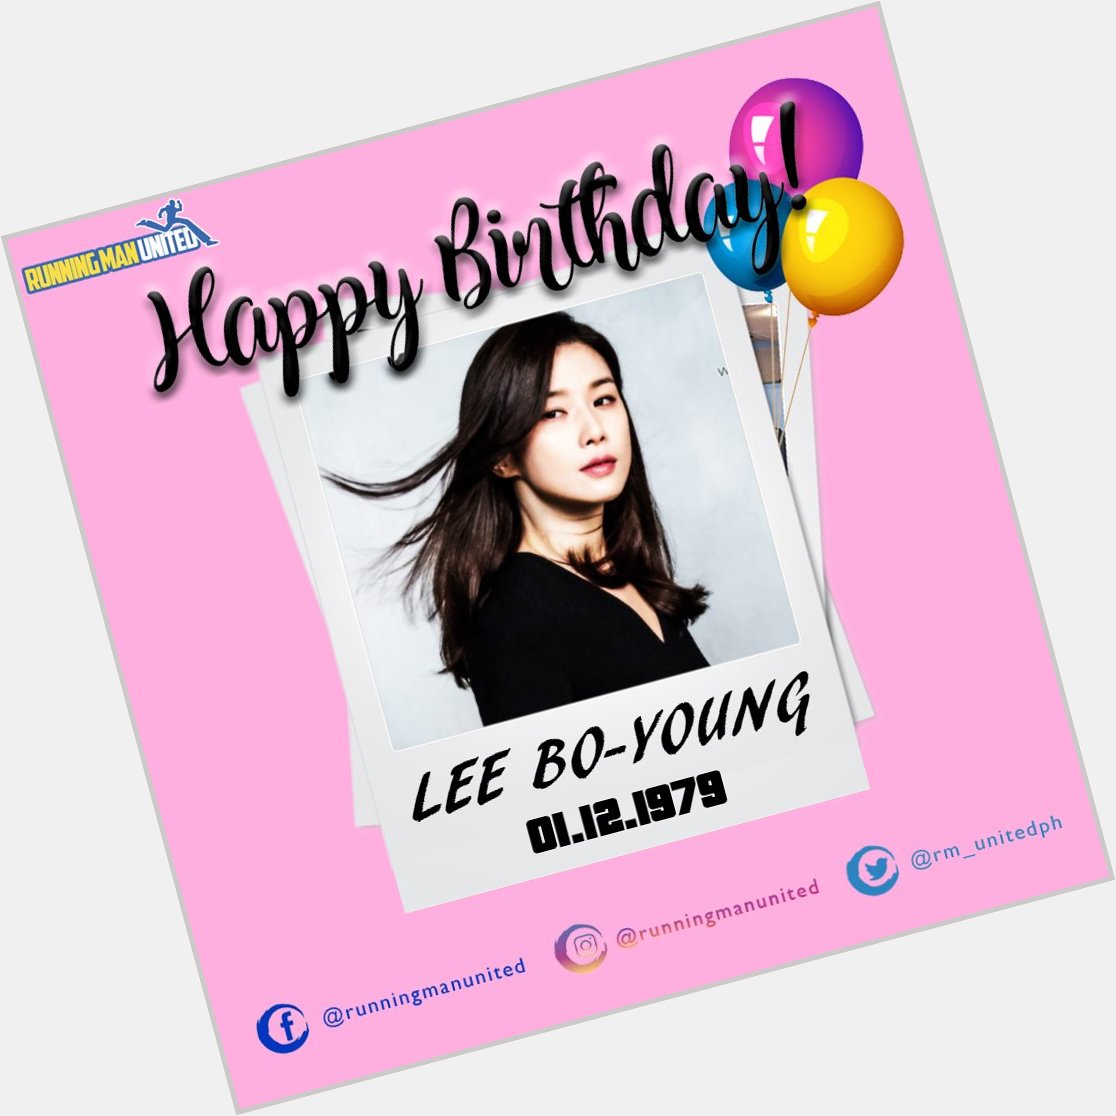 Happy Birthday Lee Bo-young! 